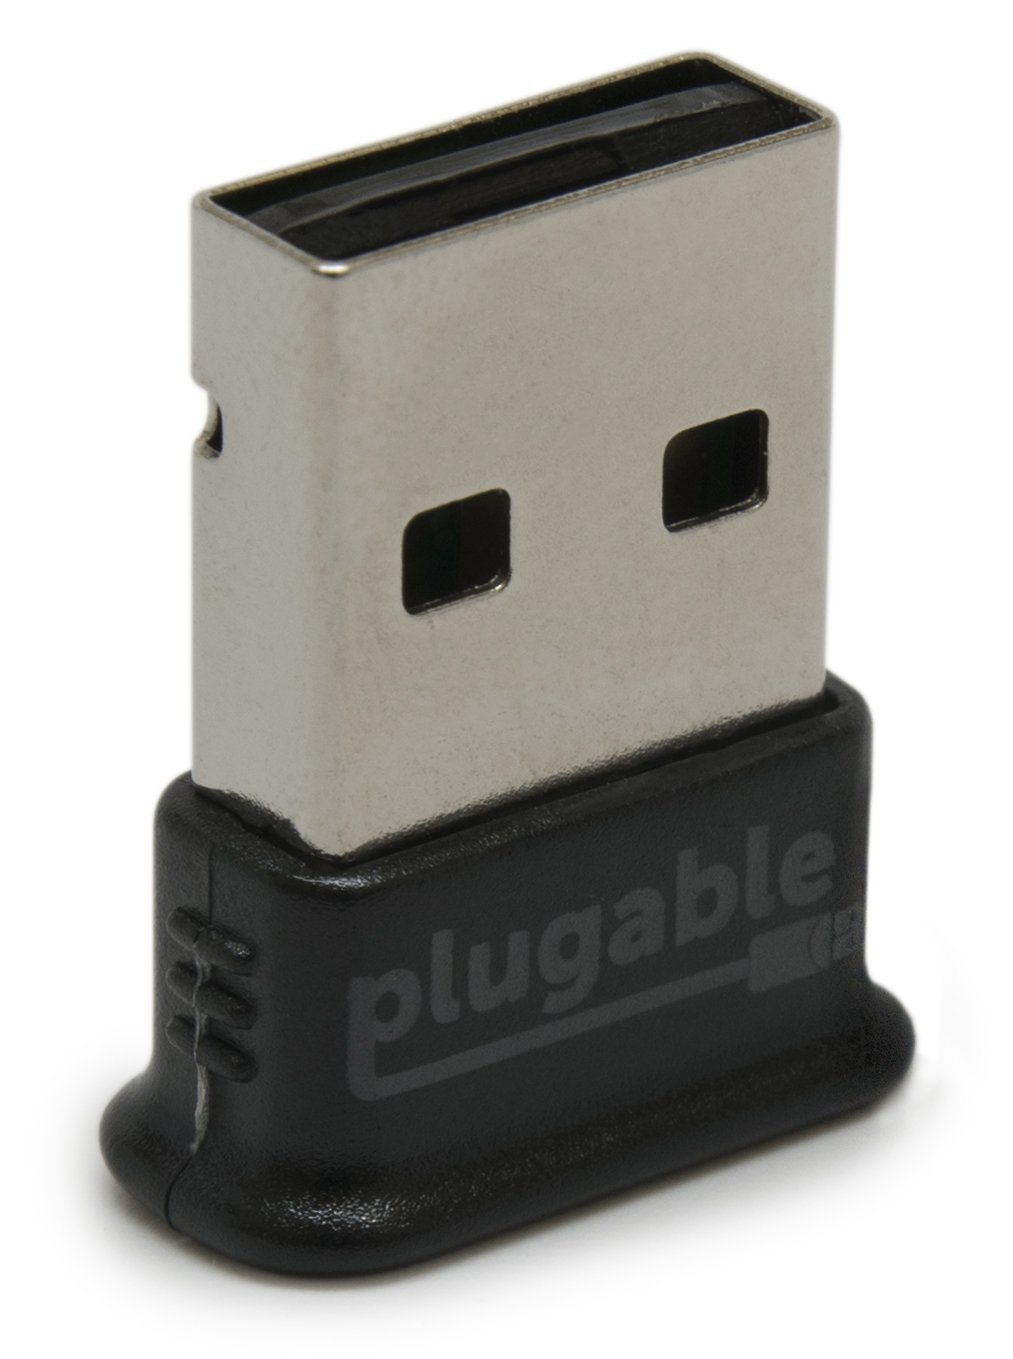 Plugable USB Bluetooth adapter